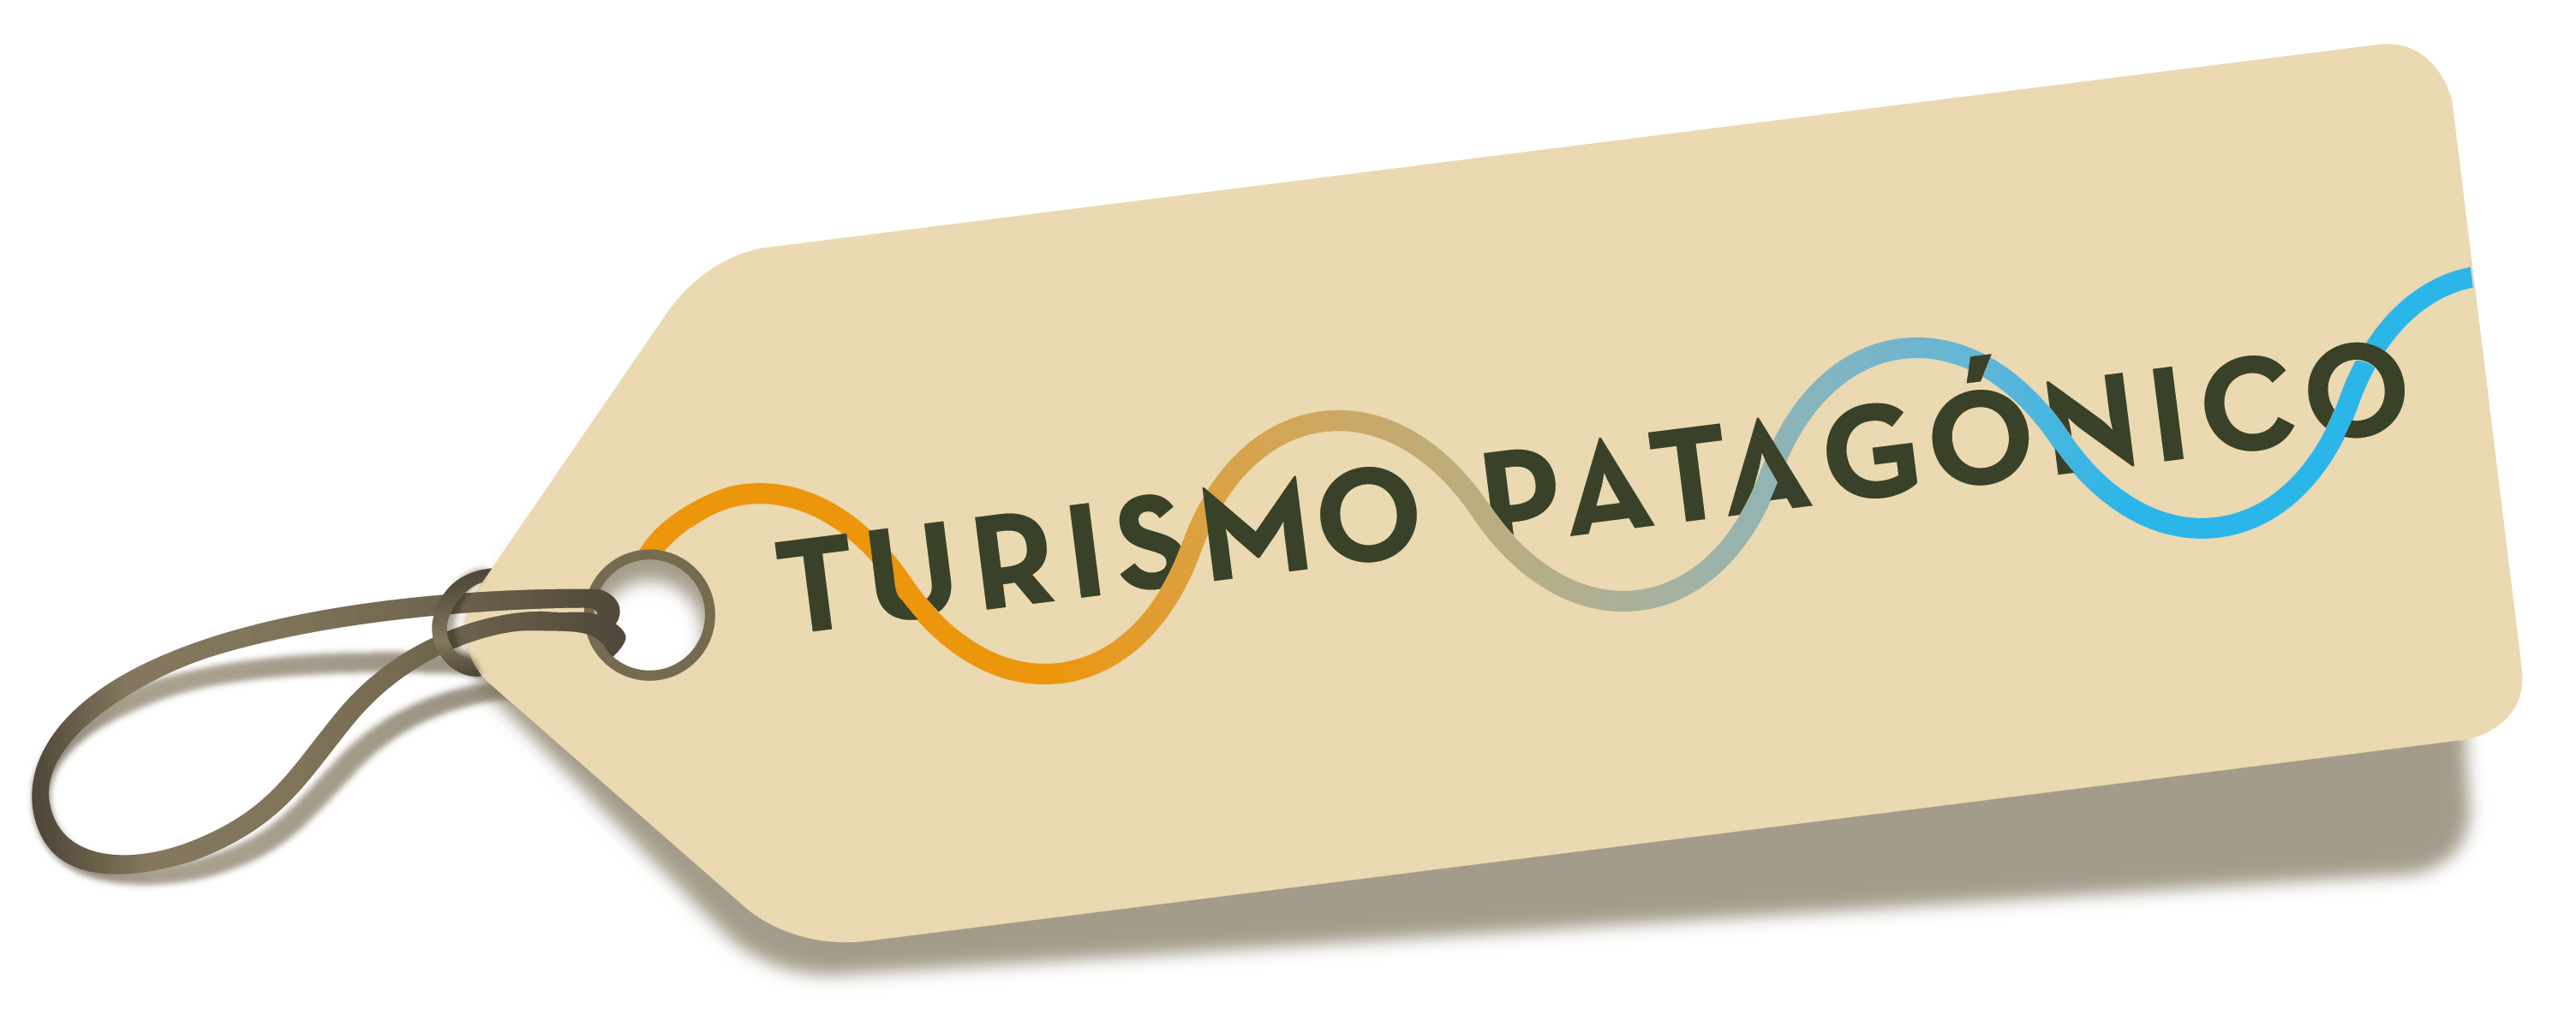 Turismo Patagonico